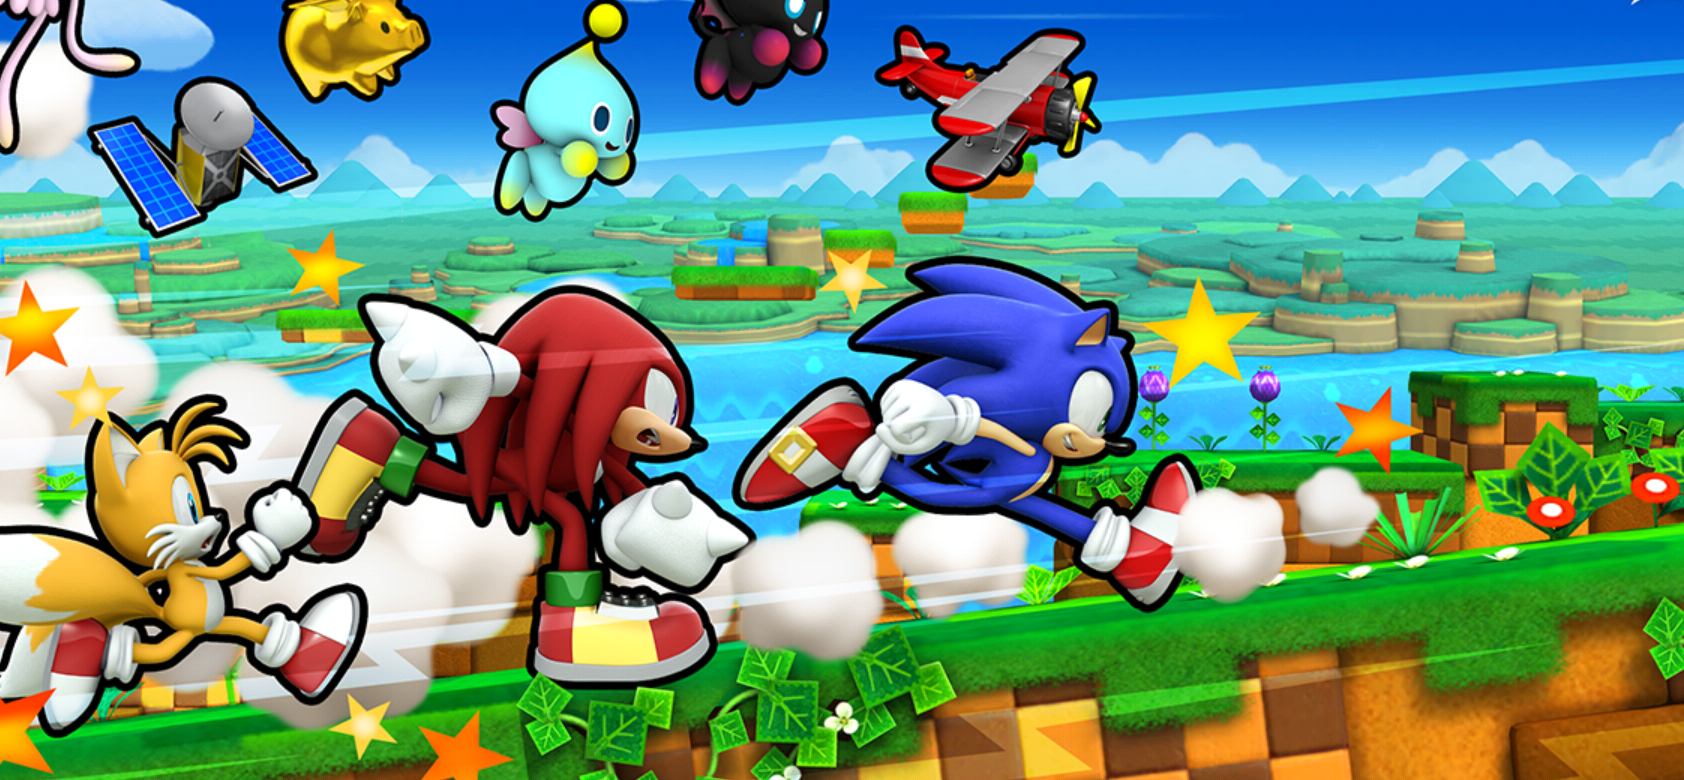 Sonic бег и гонки игра. Игра Sonic Runners. Соник Раннерс адвенчер. Sonic Runners Sonic. Sonic Runners персонажи.